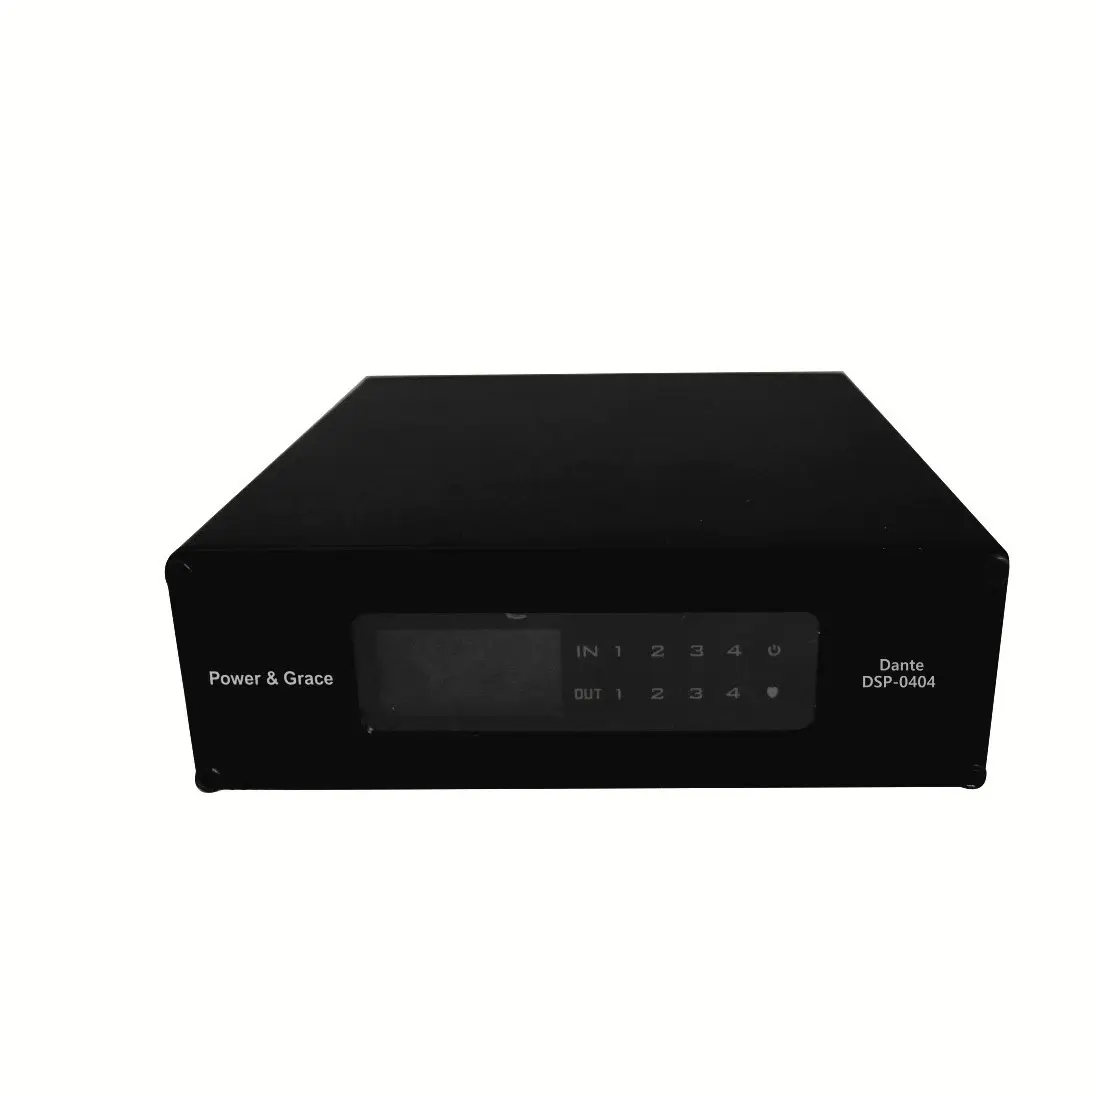 Prosesor Sinyal Digital DSP Terpadu RS485 5 Band PEQ 4 Input 4 Output Dante Jaringan Sistem Audio Transmitter dengan Kompresor